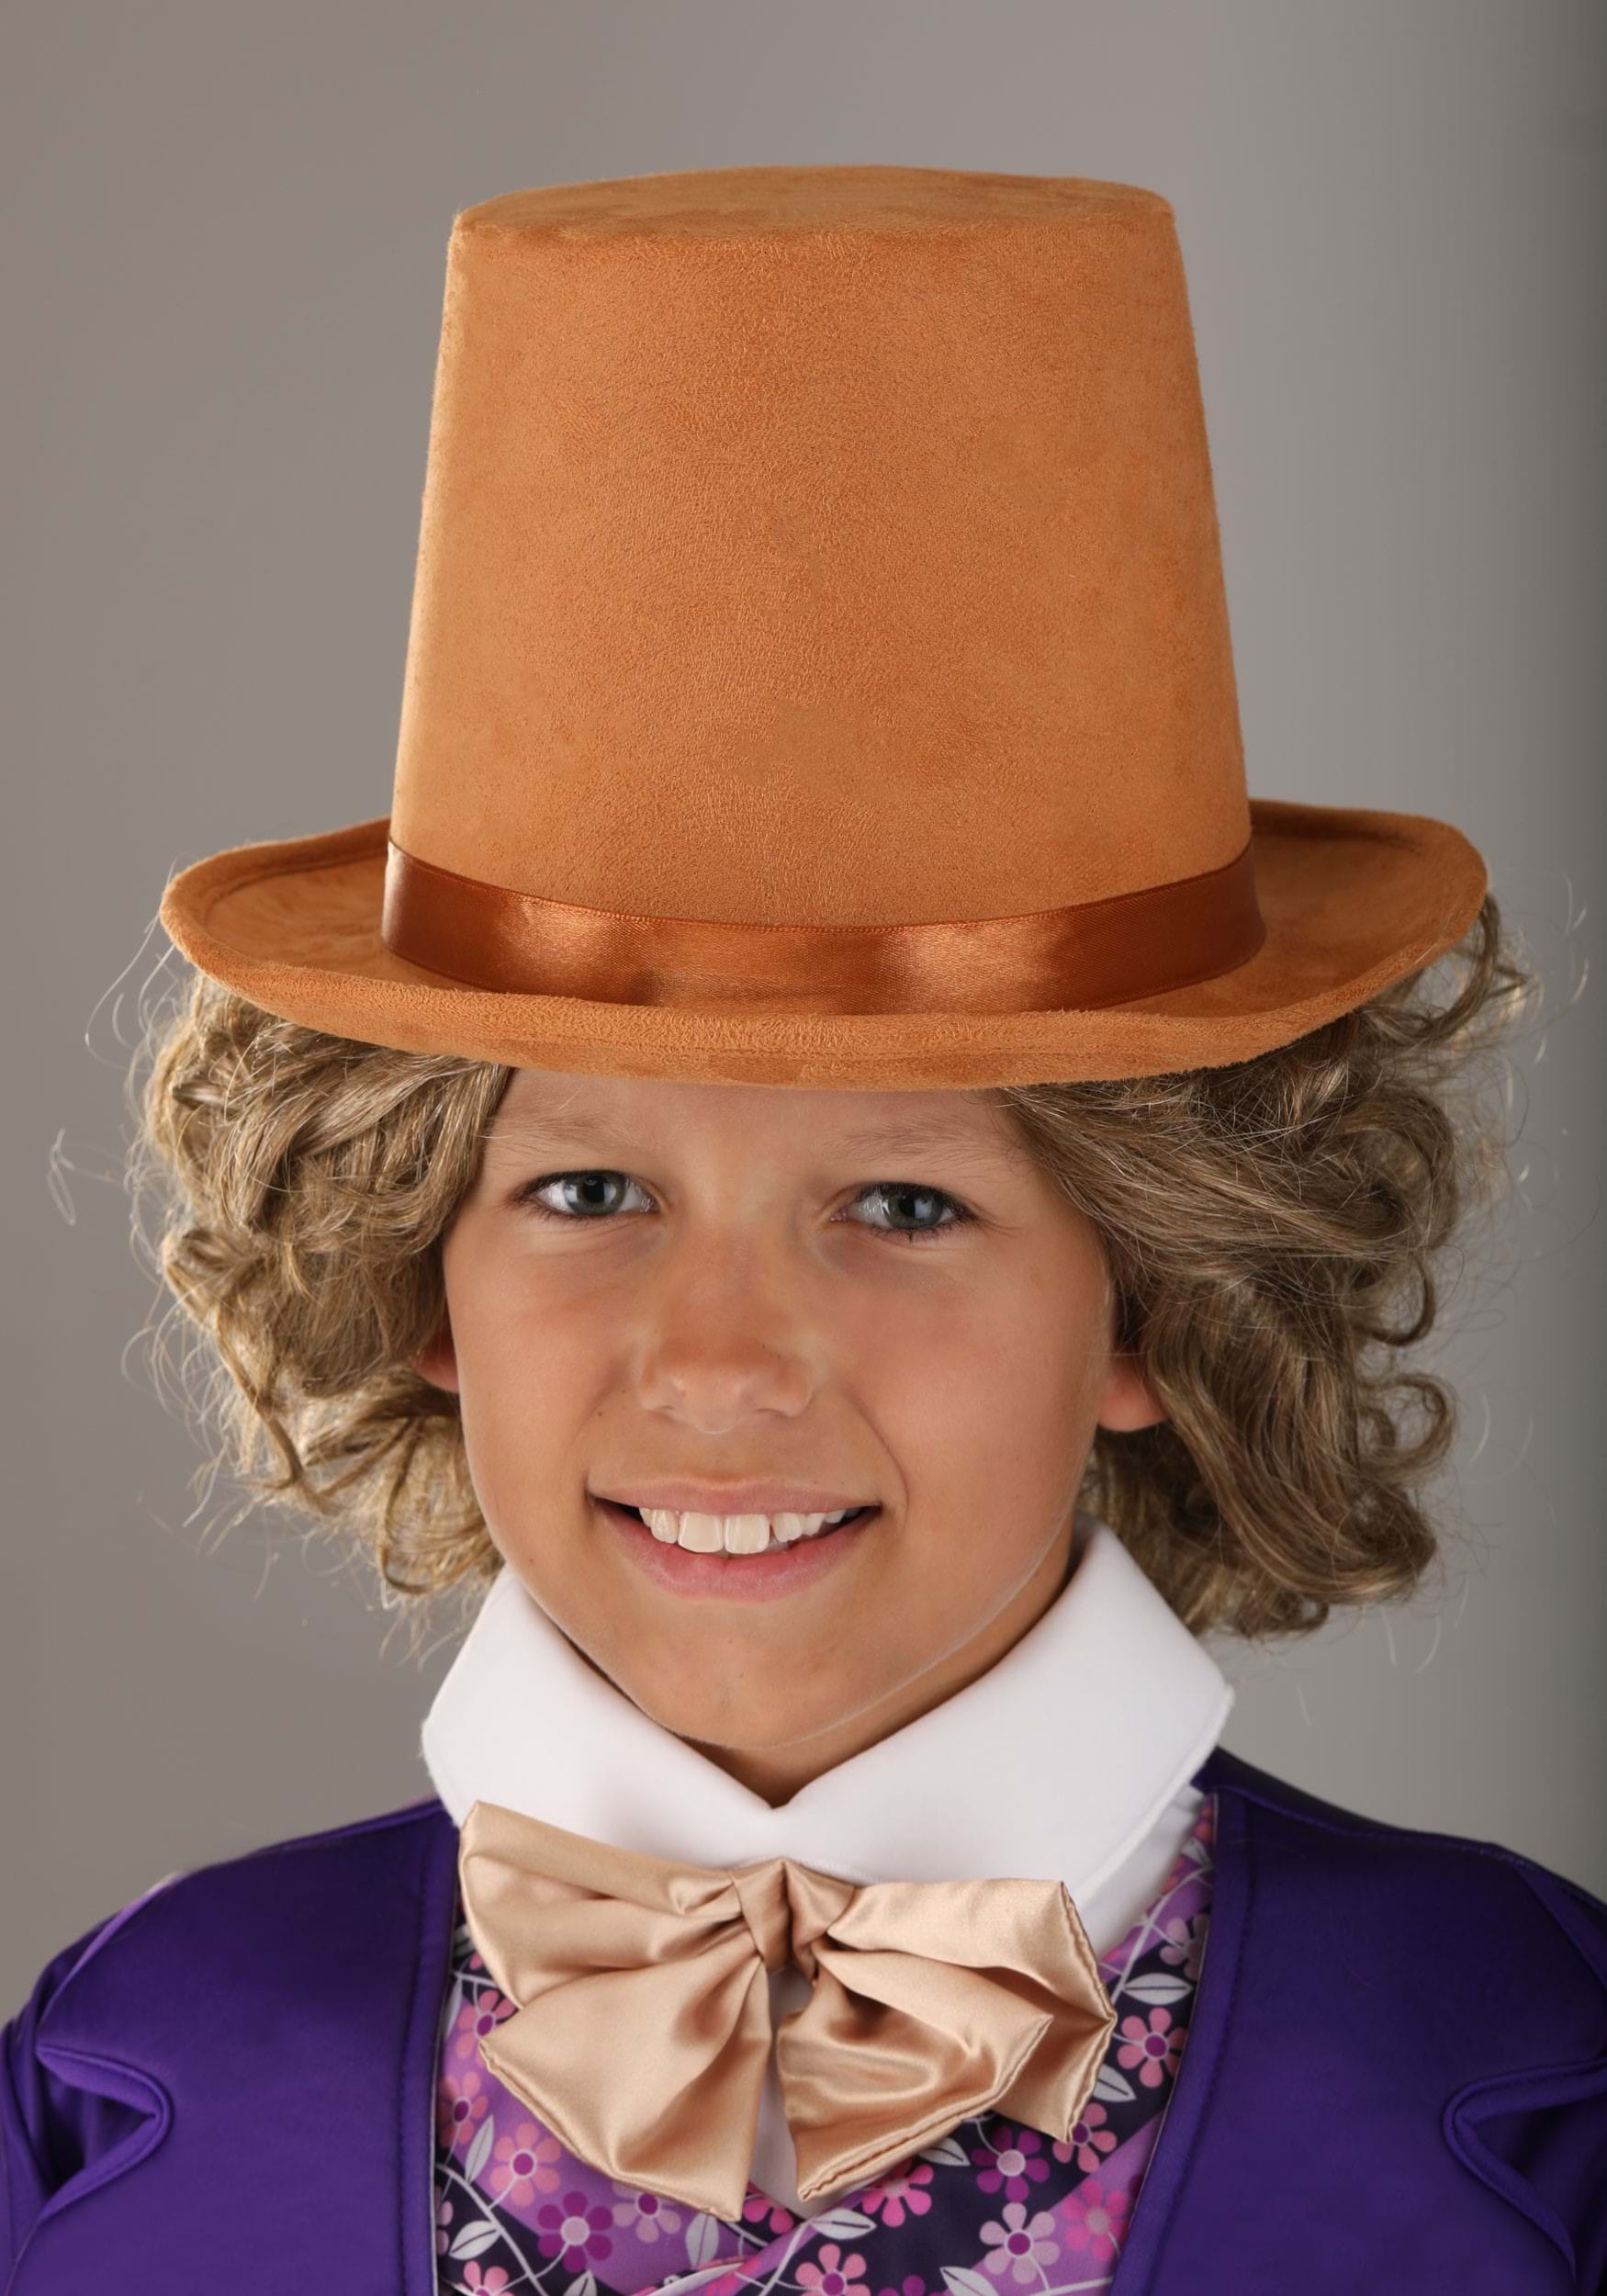 Willy Wonka Boy's Costume